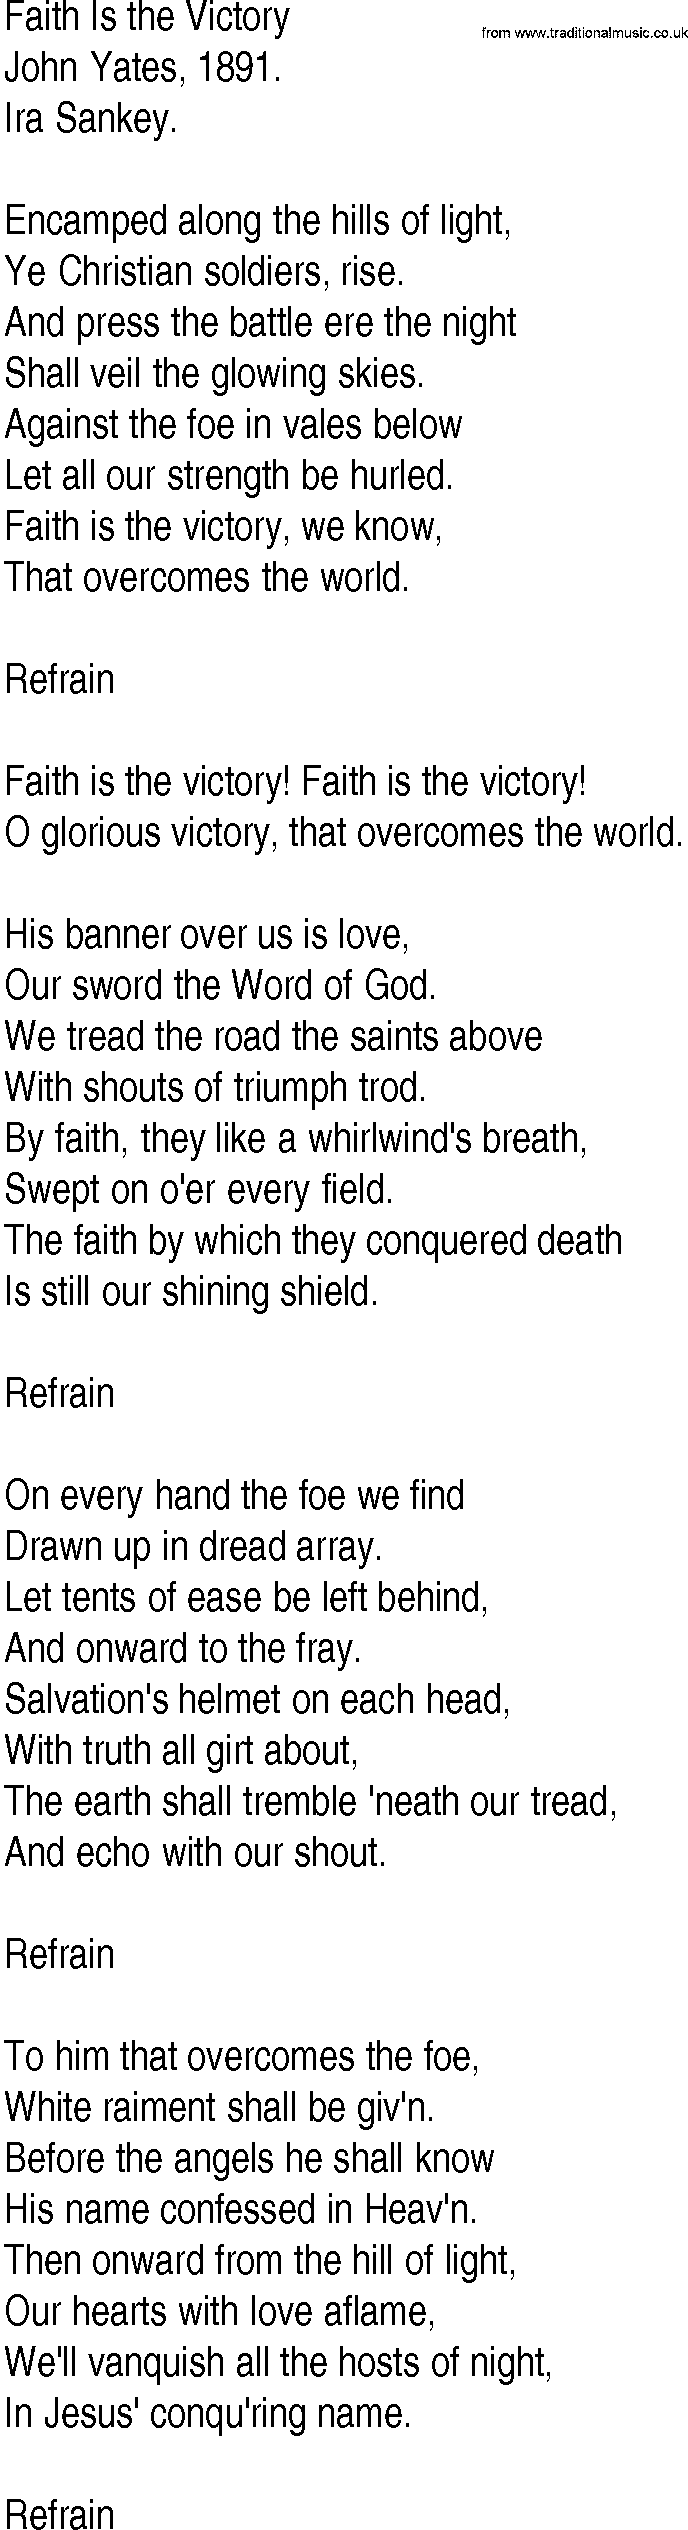 Hymn and Gospel Song: Faith Is the Victory by John Yates lyrics